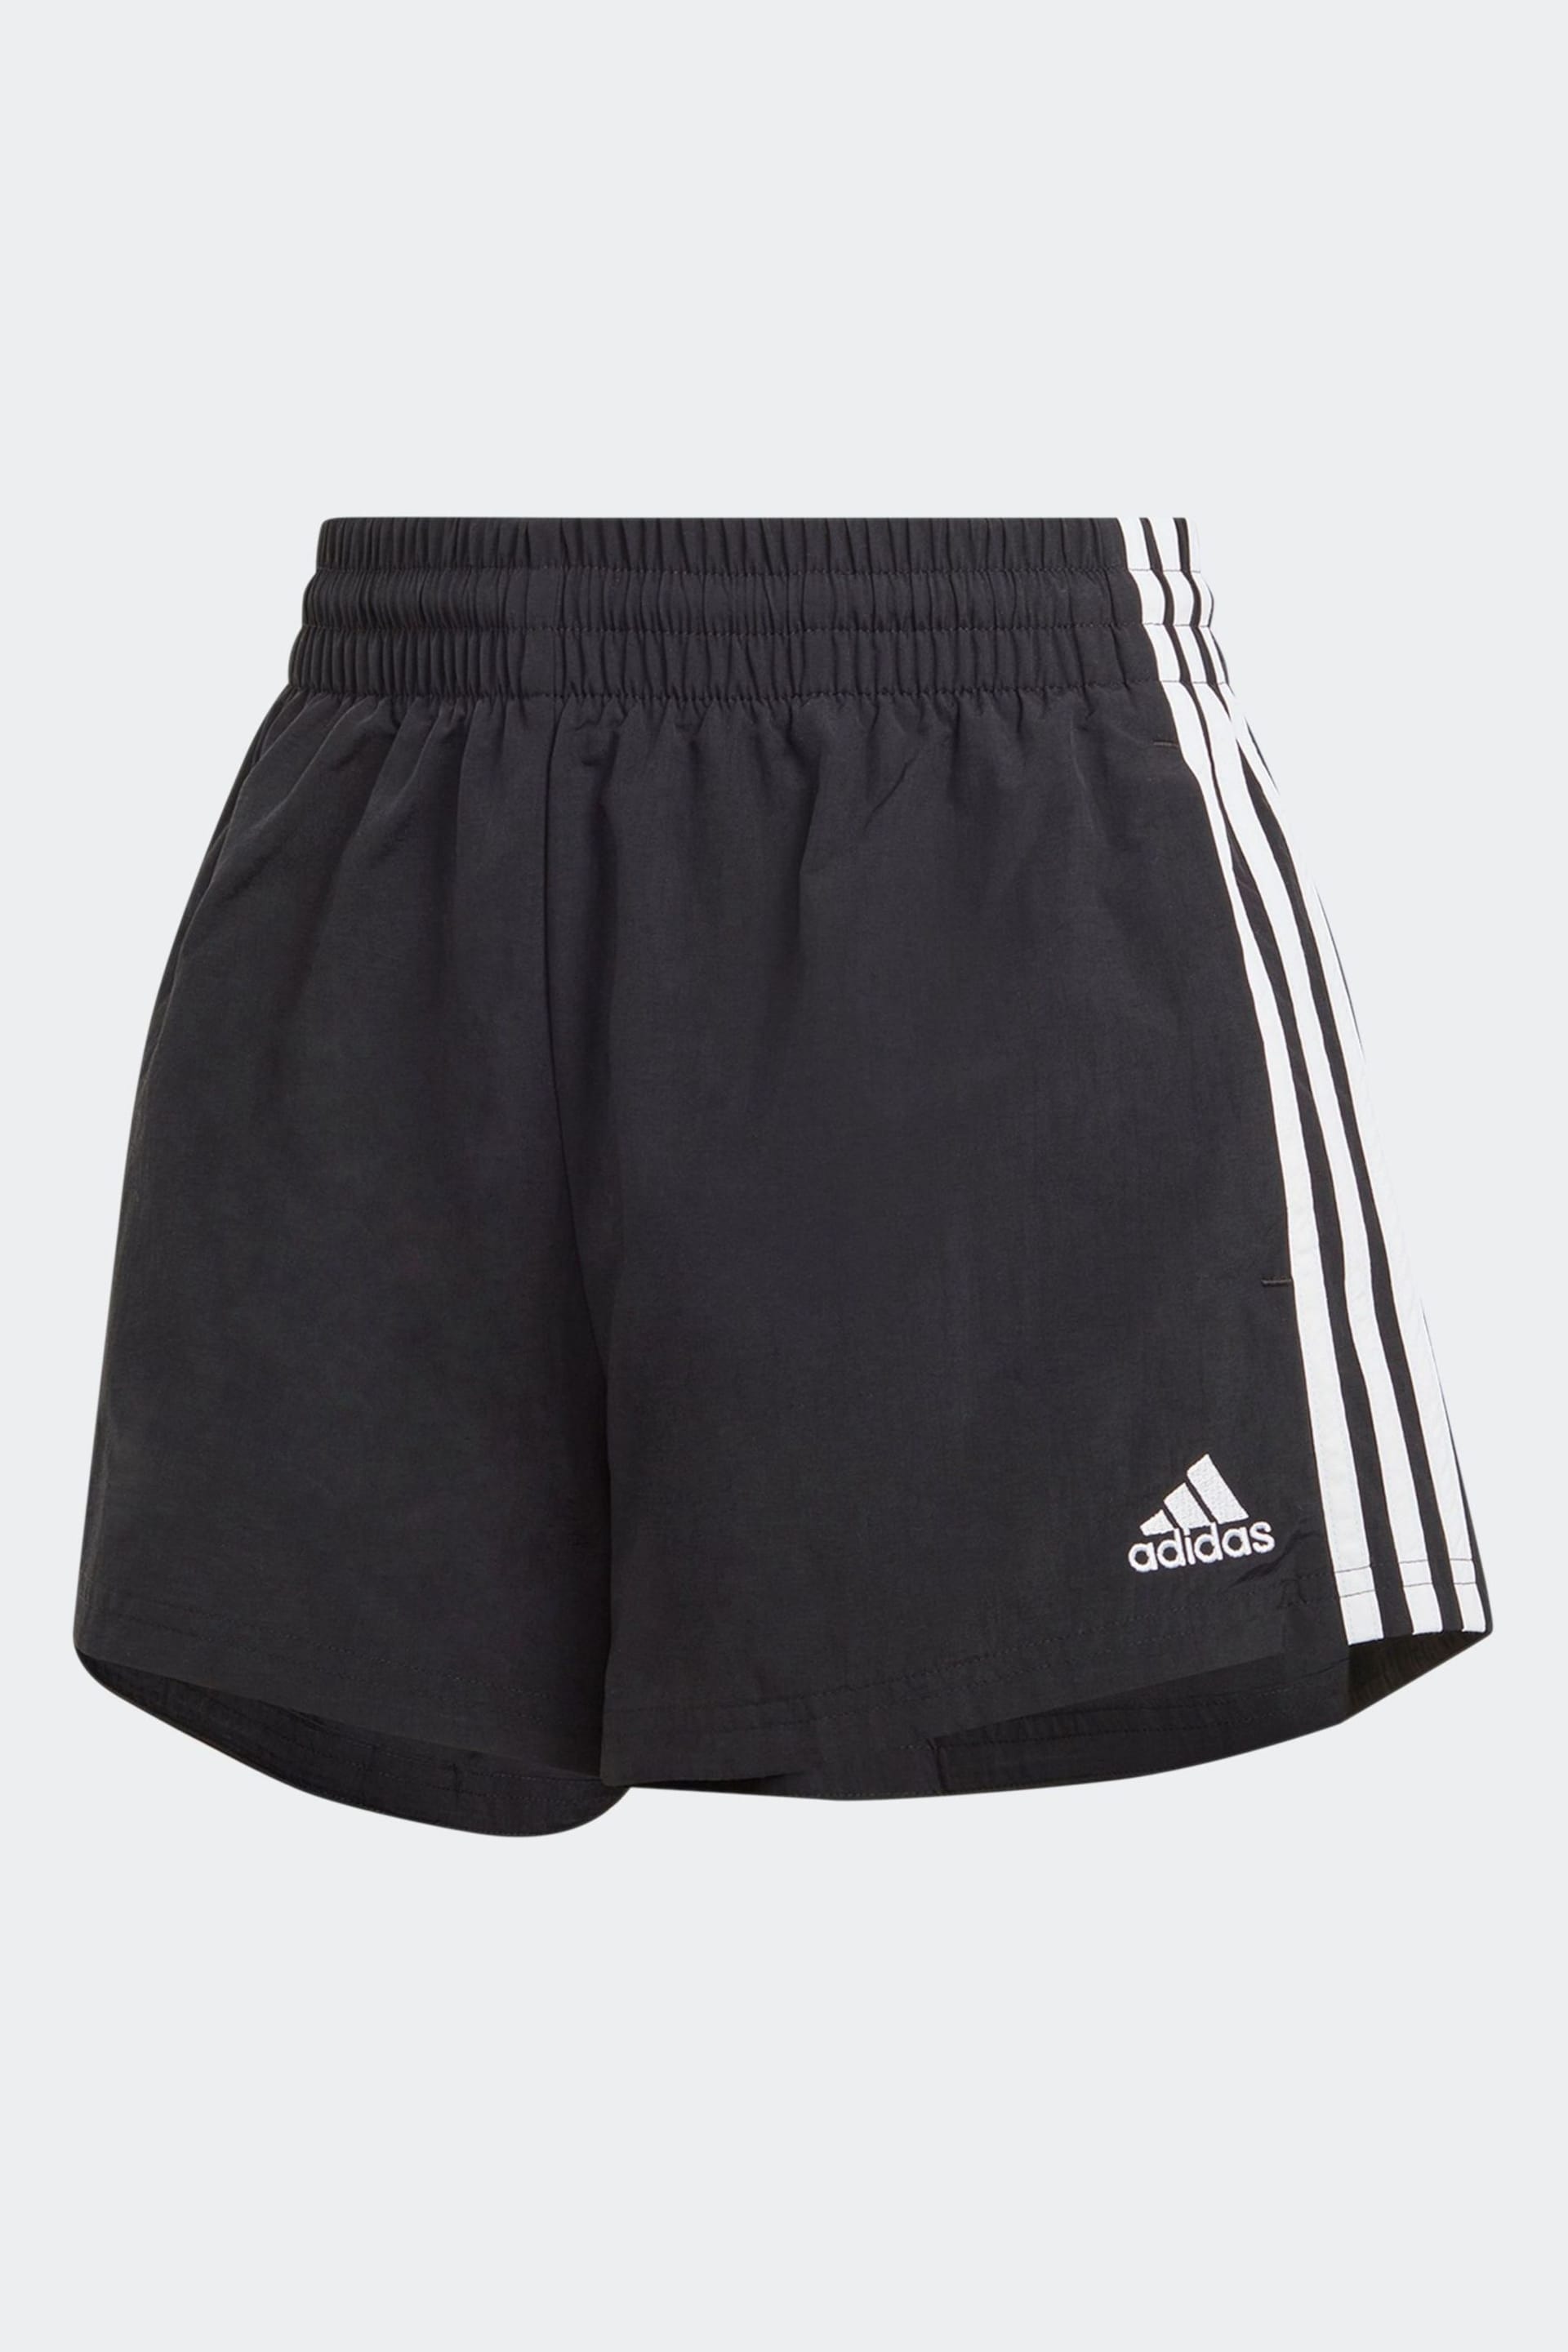 adidas Black Sportswear Essentials 3-Stripes Woven Shorts - Image 6 of 6